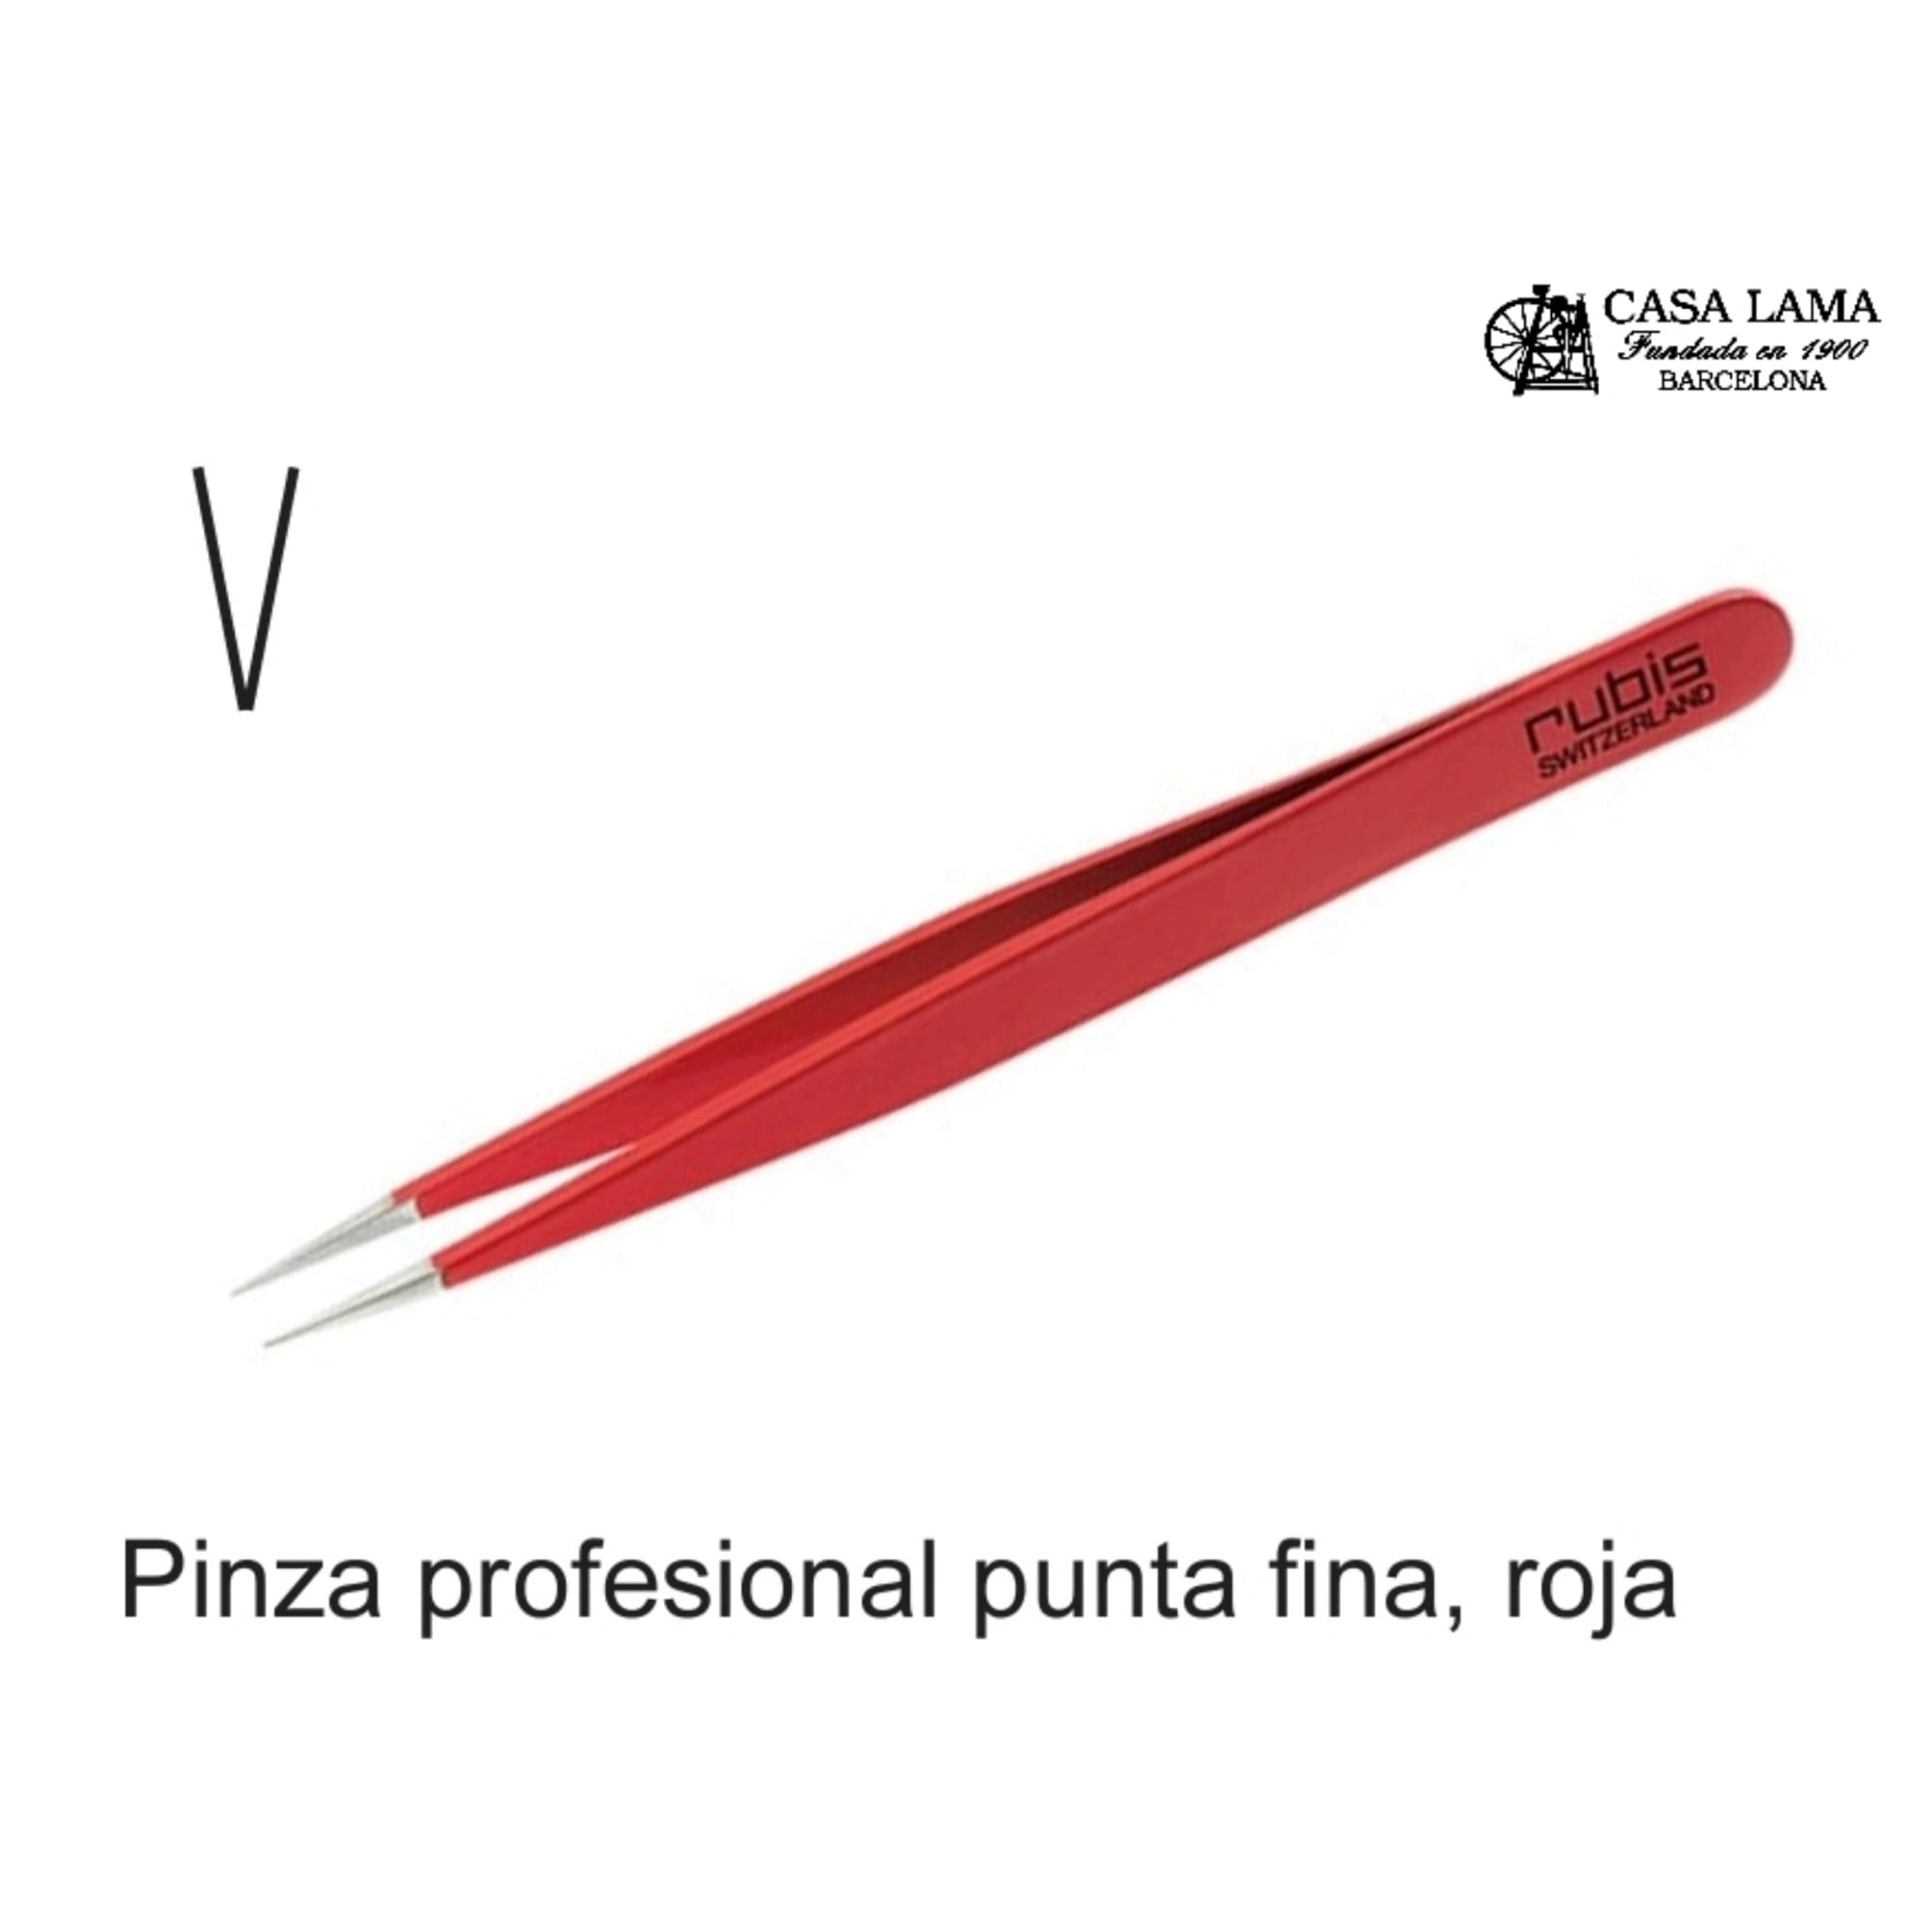 Pinza Rubis profesional punta fina Roja - Cuchilleria Casa Lama